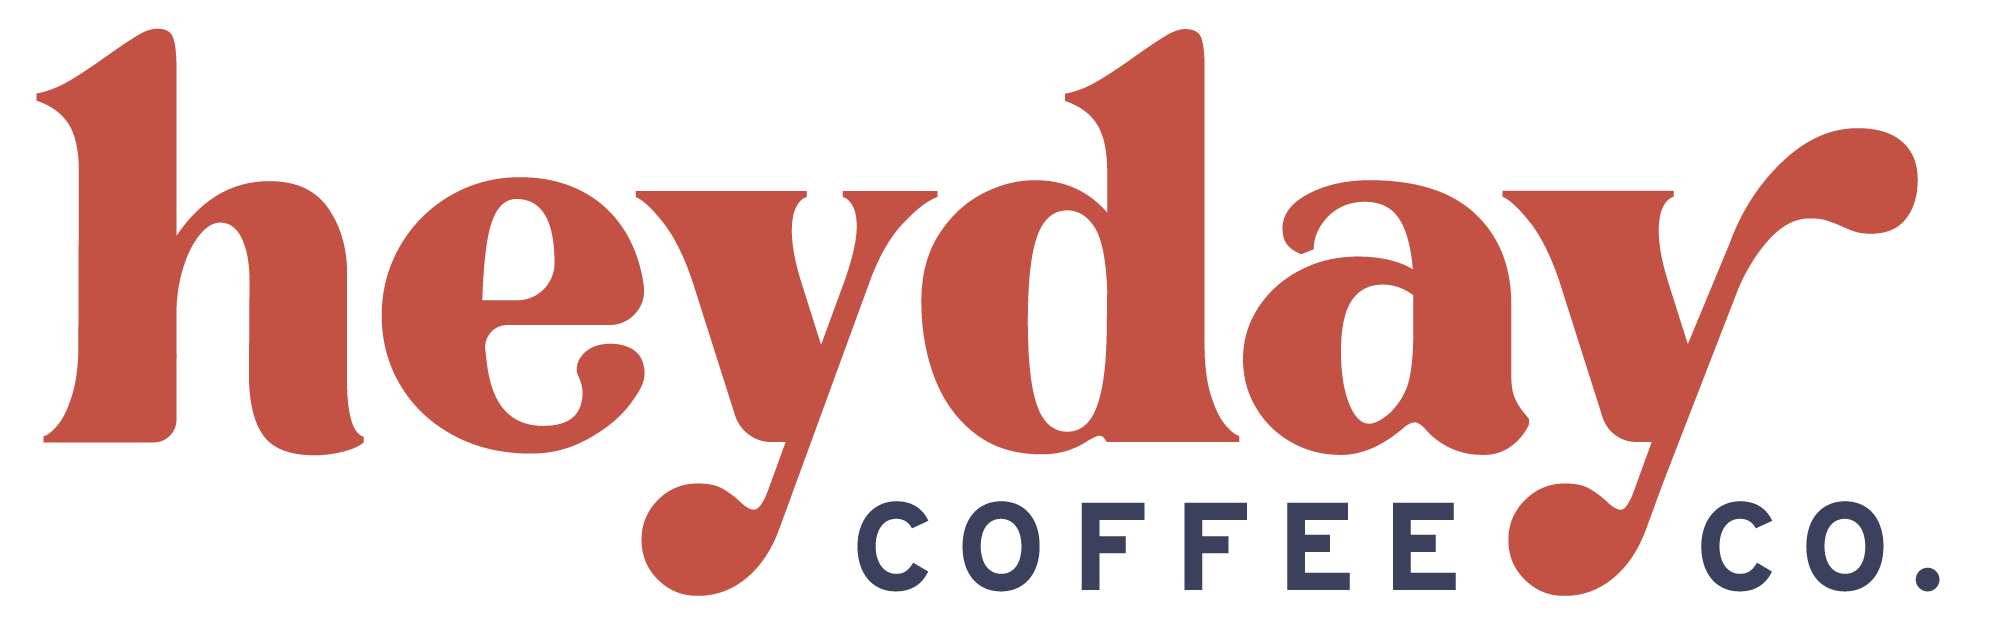 horizontally oriented Heyday Coffee Co logo.